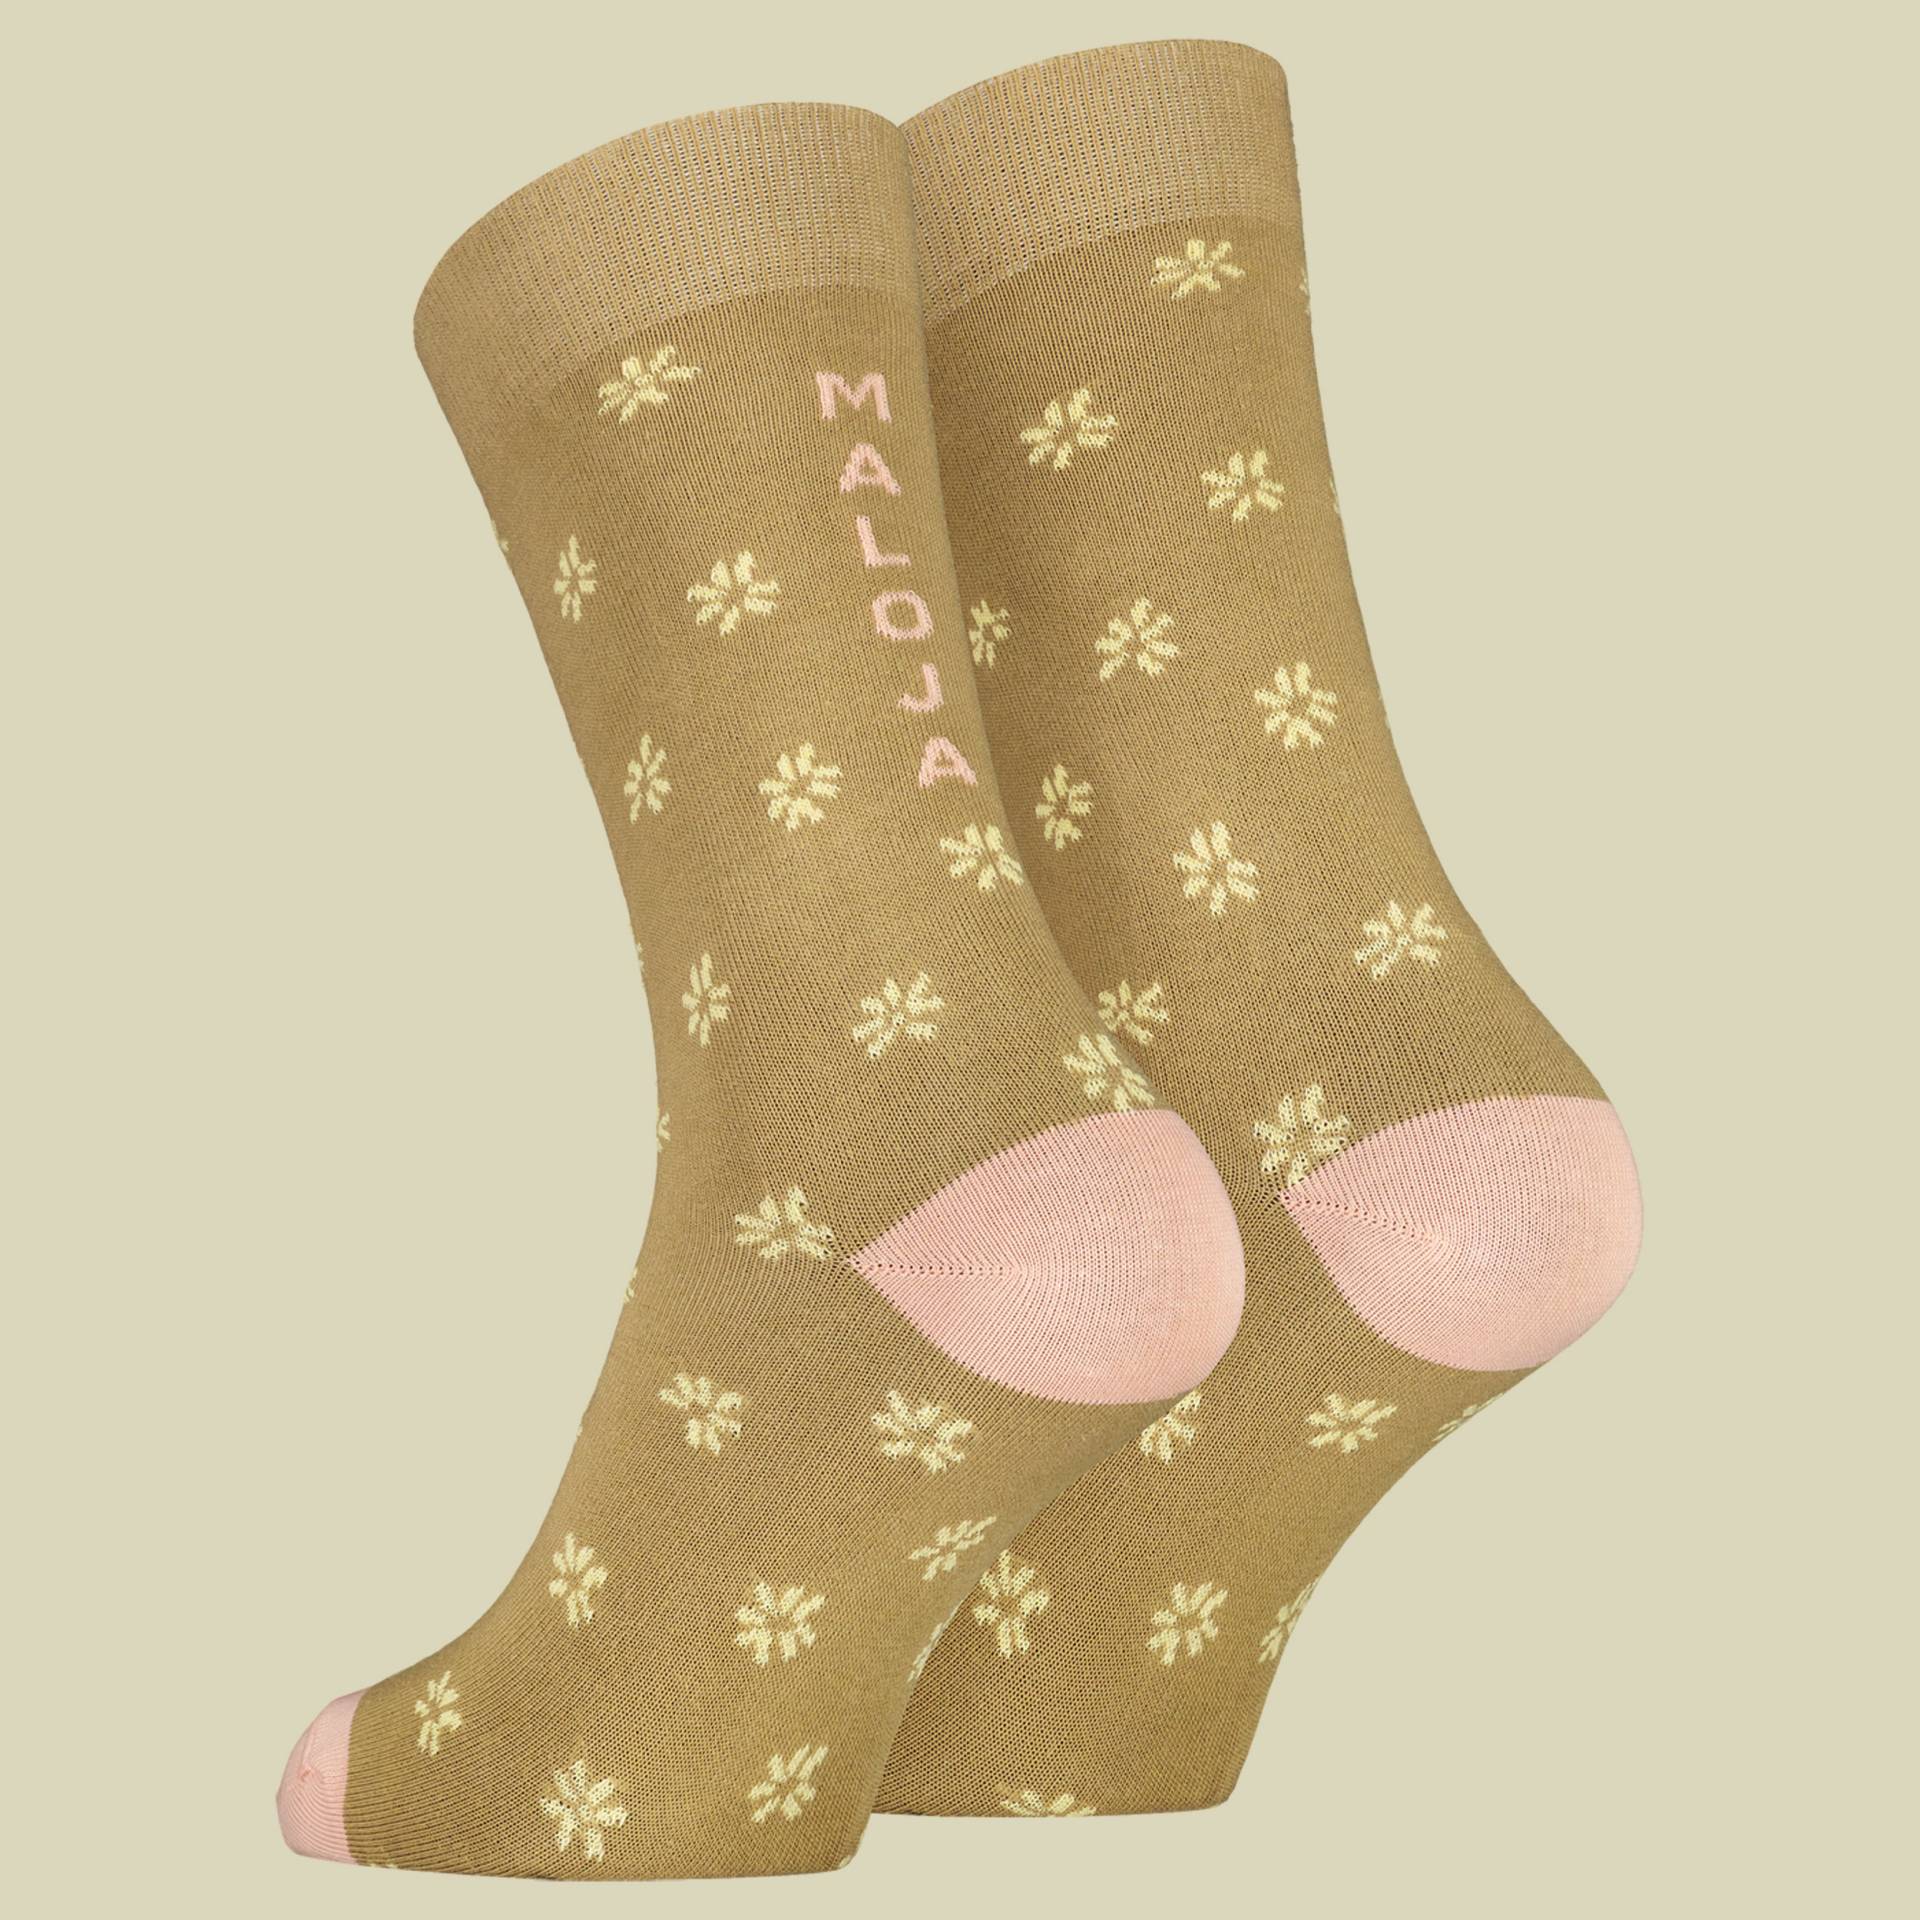 TanayM. Socks Women Größe 39-42 Farbe clay multi von Maloja